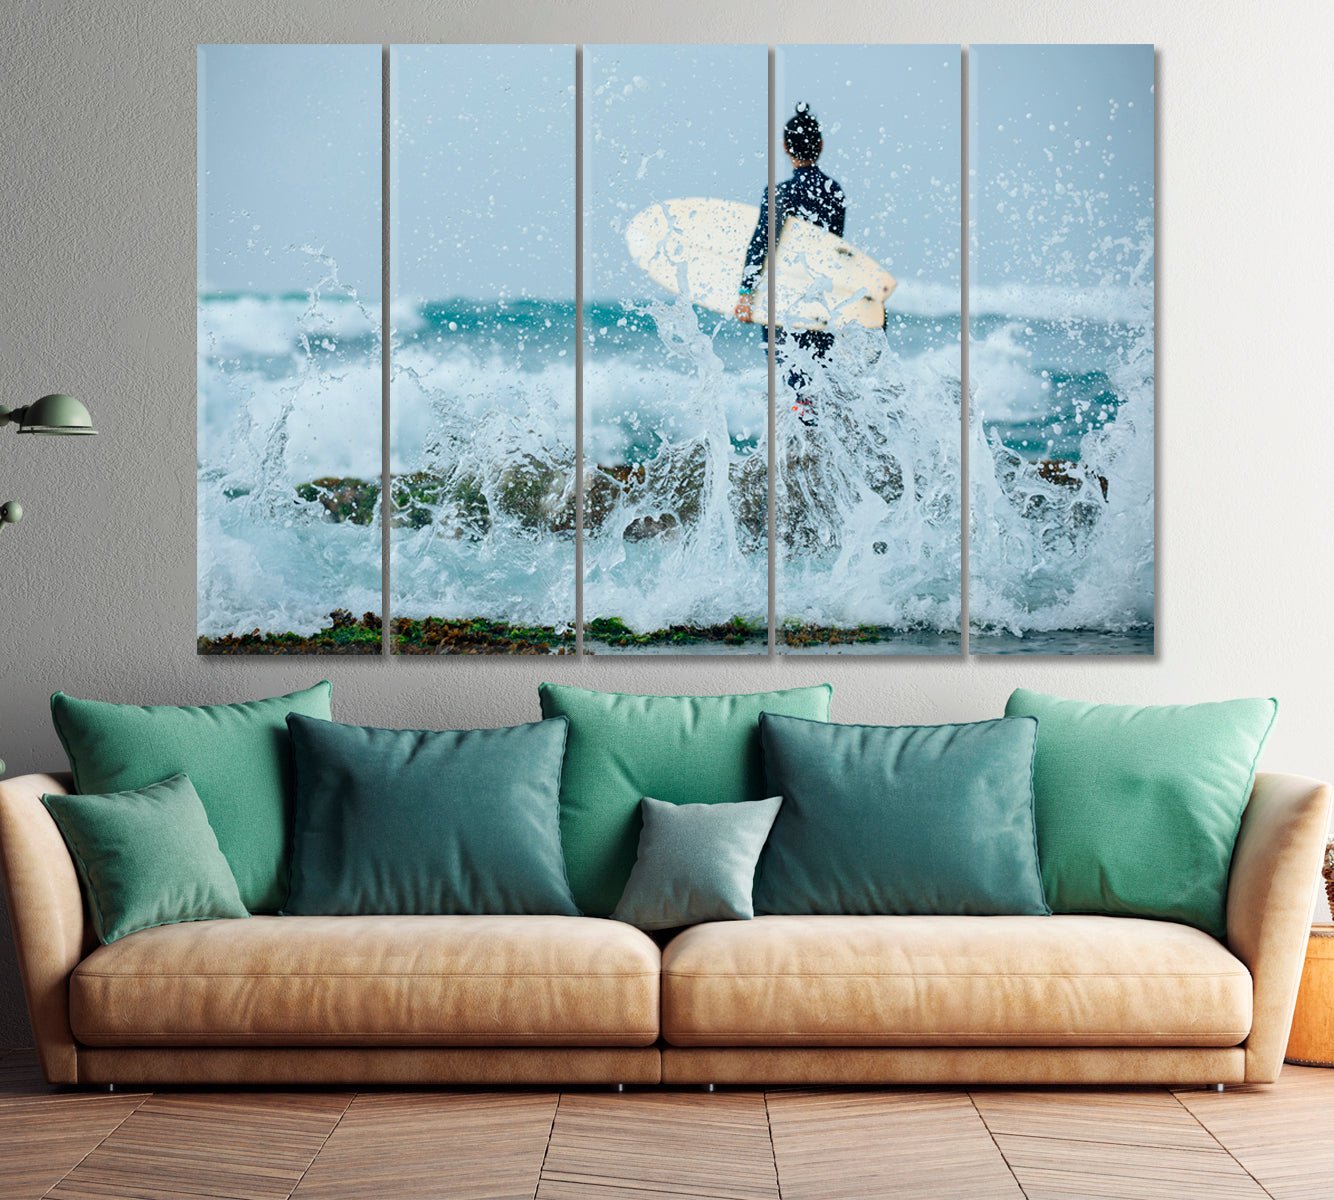 BIG WAVES Surf Wild Ocean Surfer Surfboard Motivation Sport Poster Print Decor Artesty 5 panels 36" x 24" 